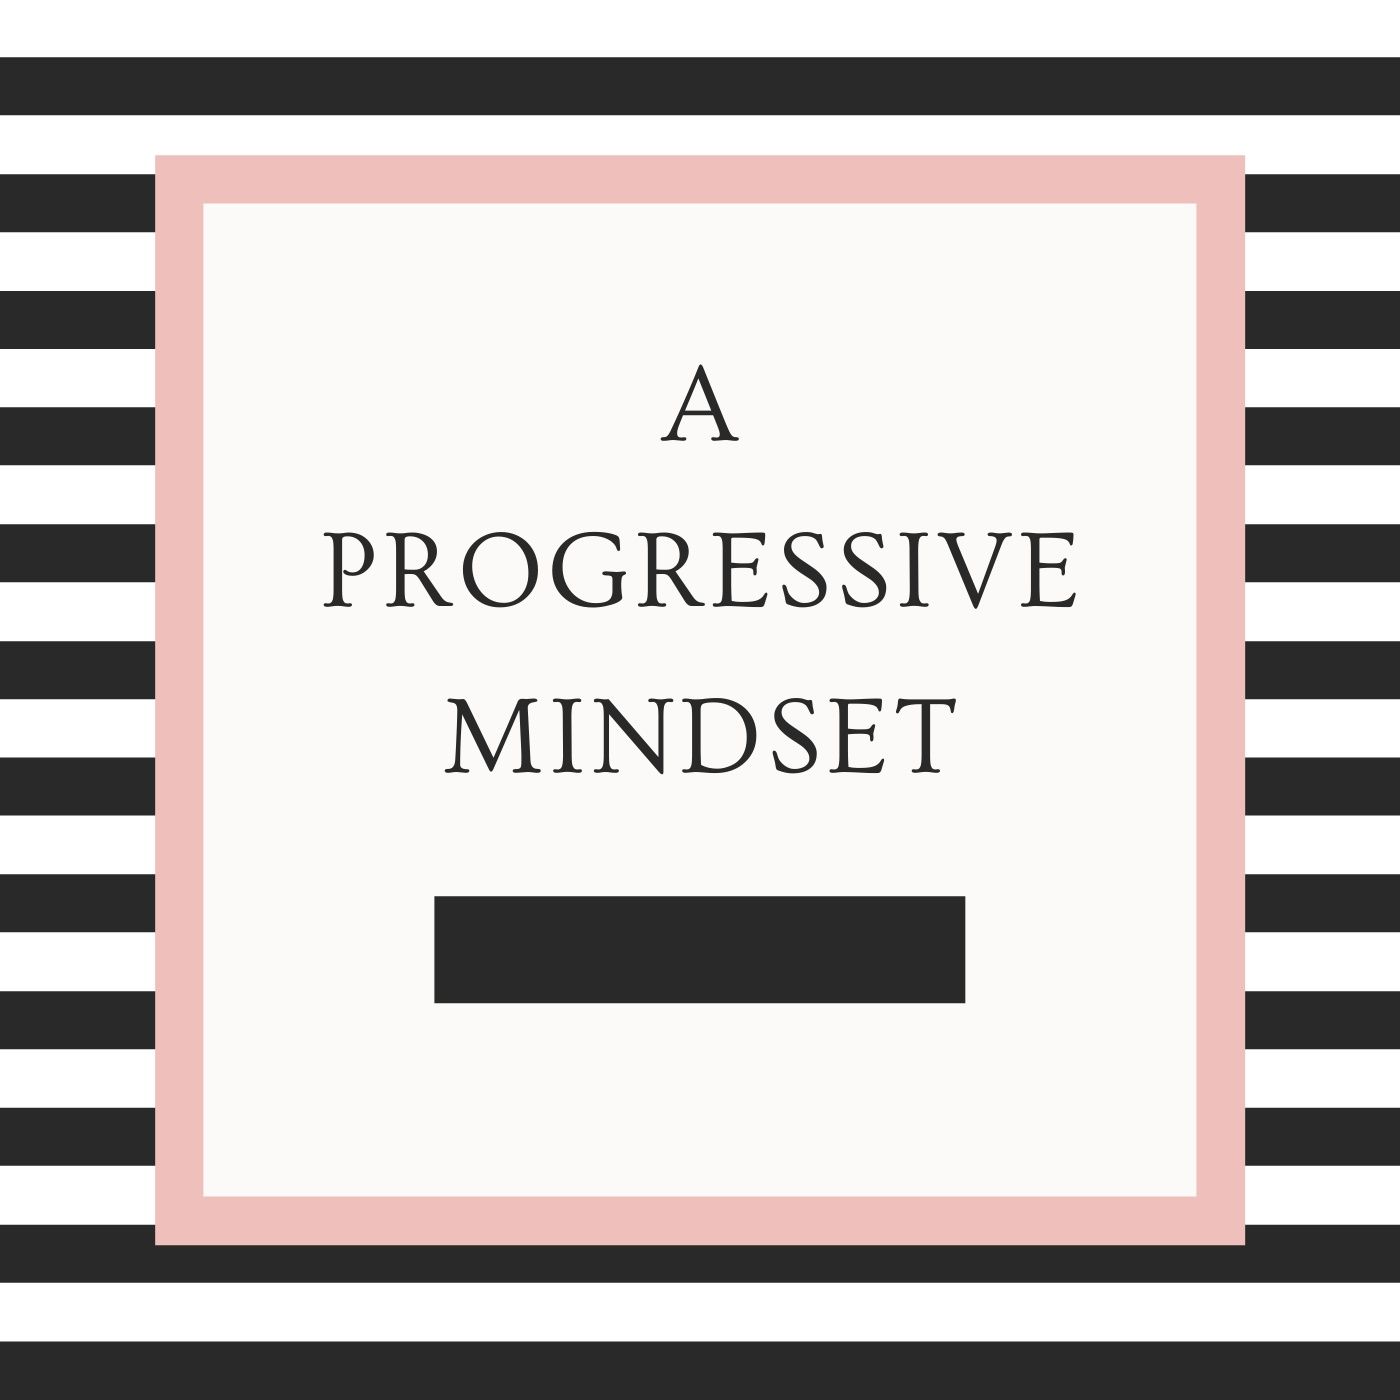 A Progressive Mindset